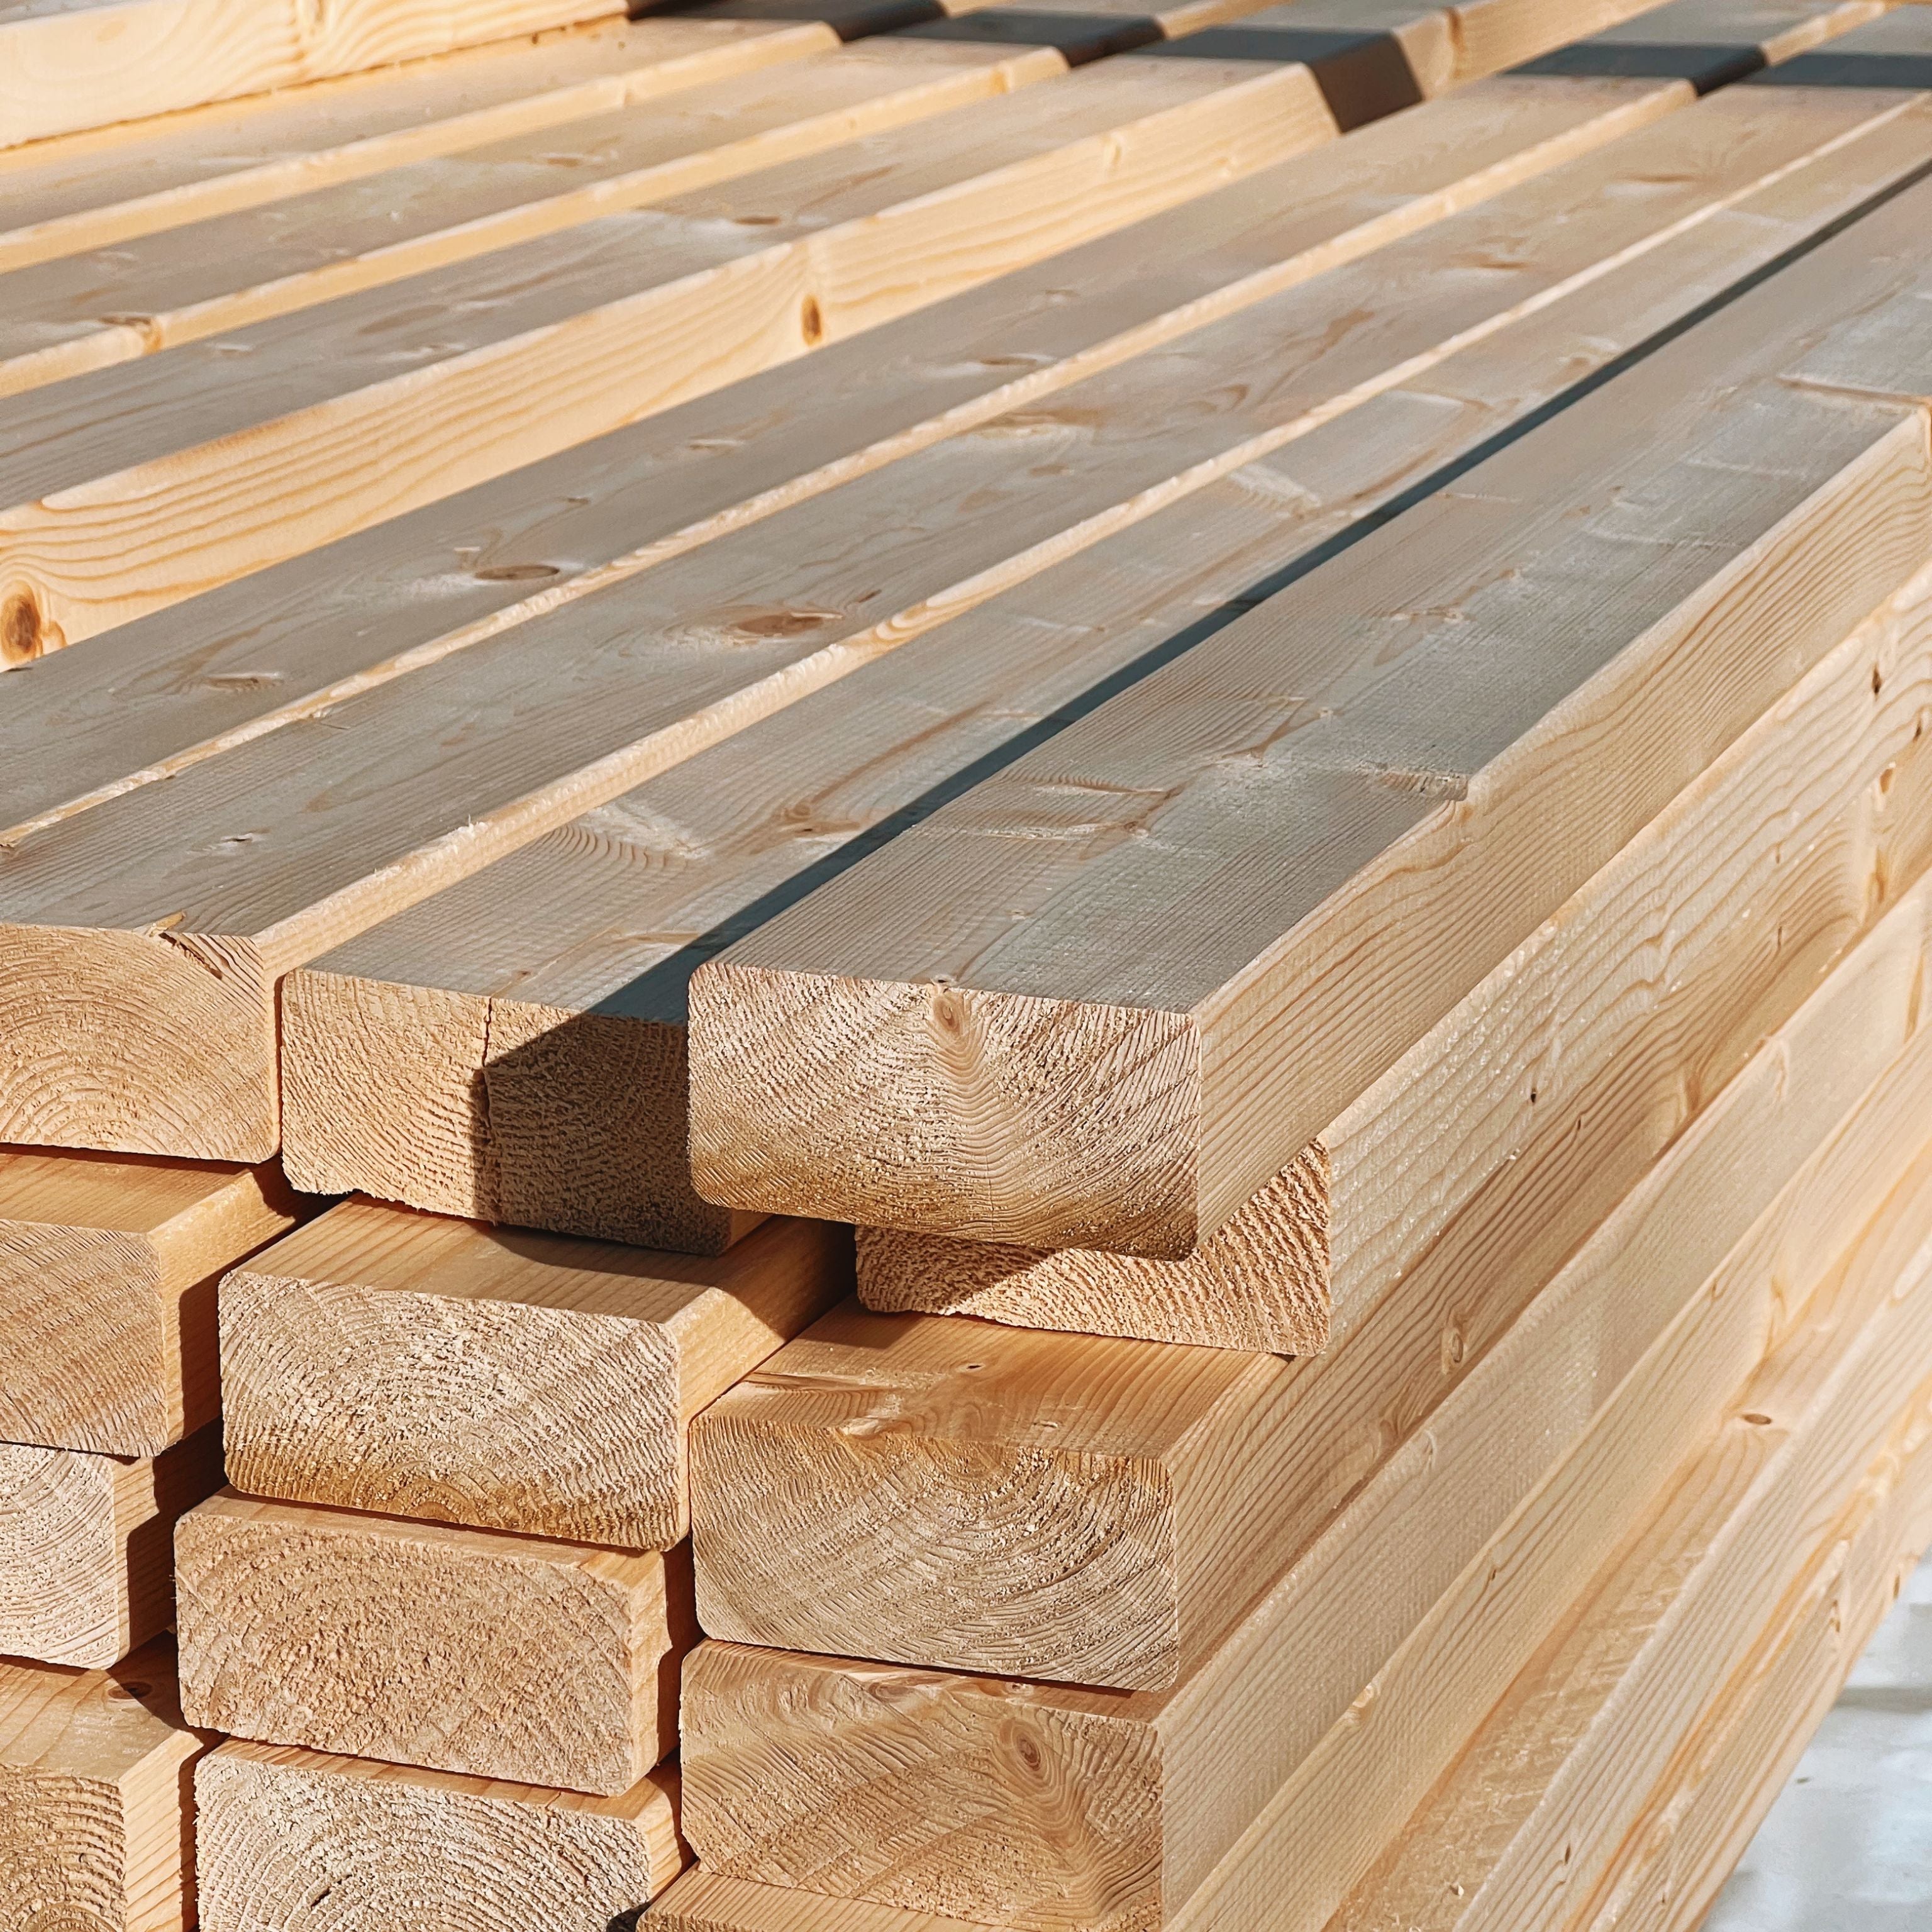 Construction Timber